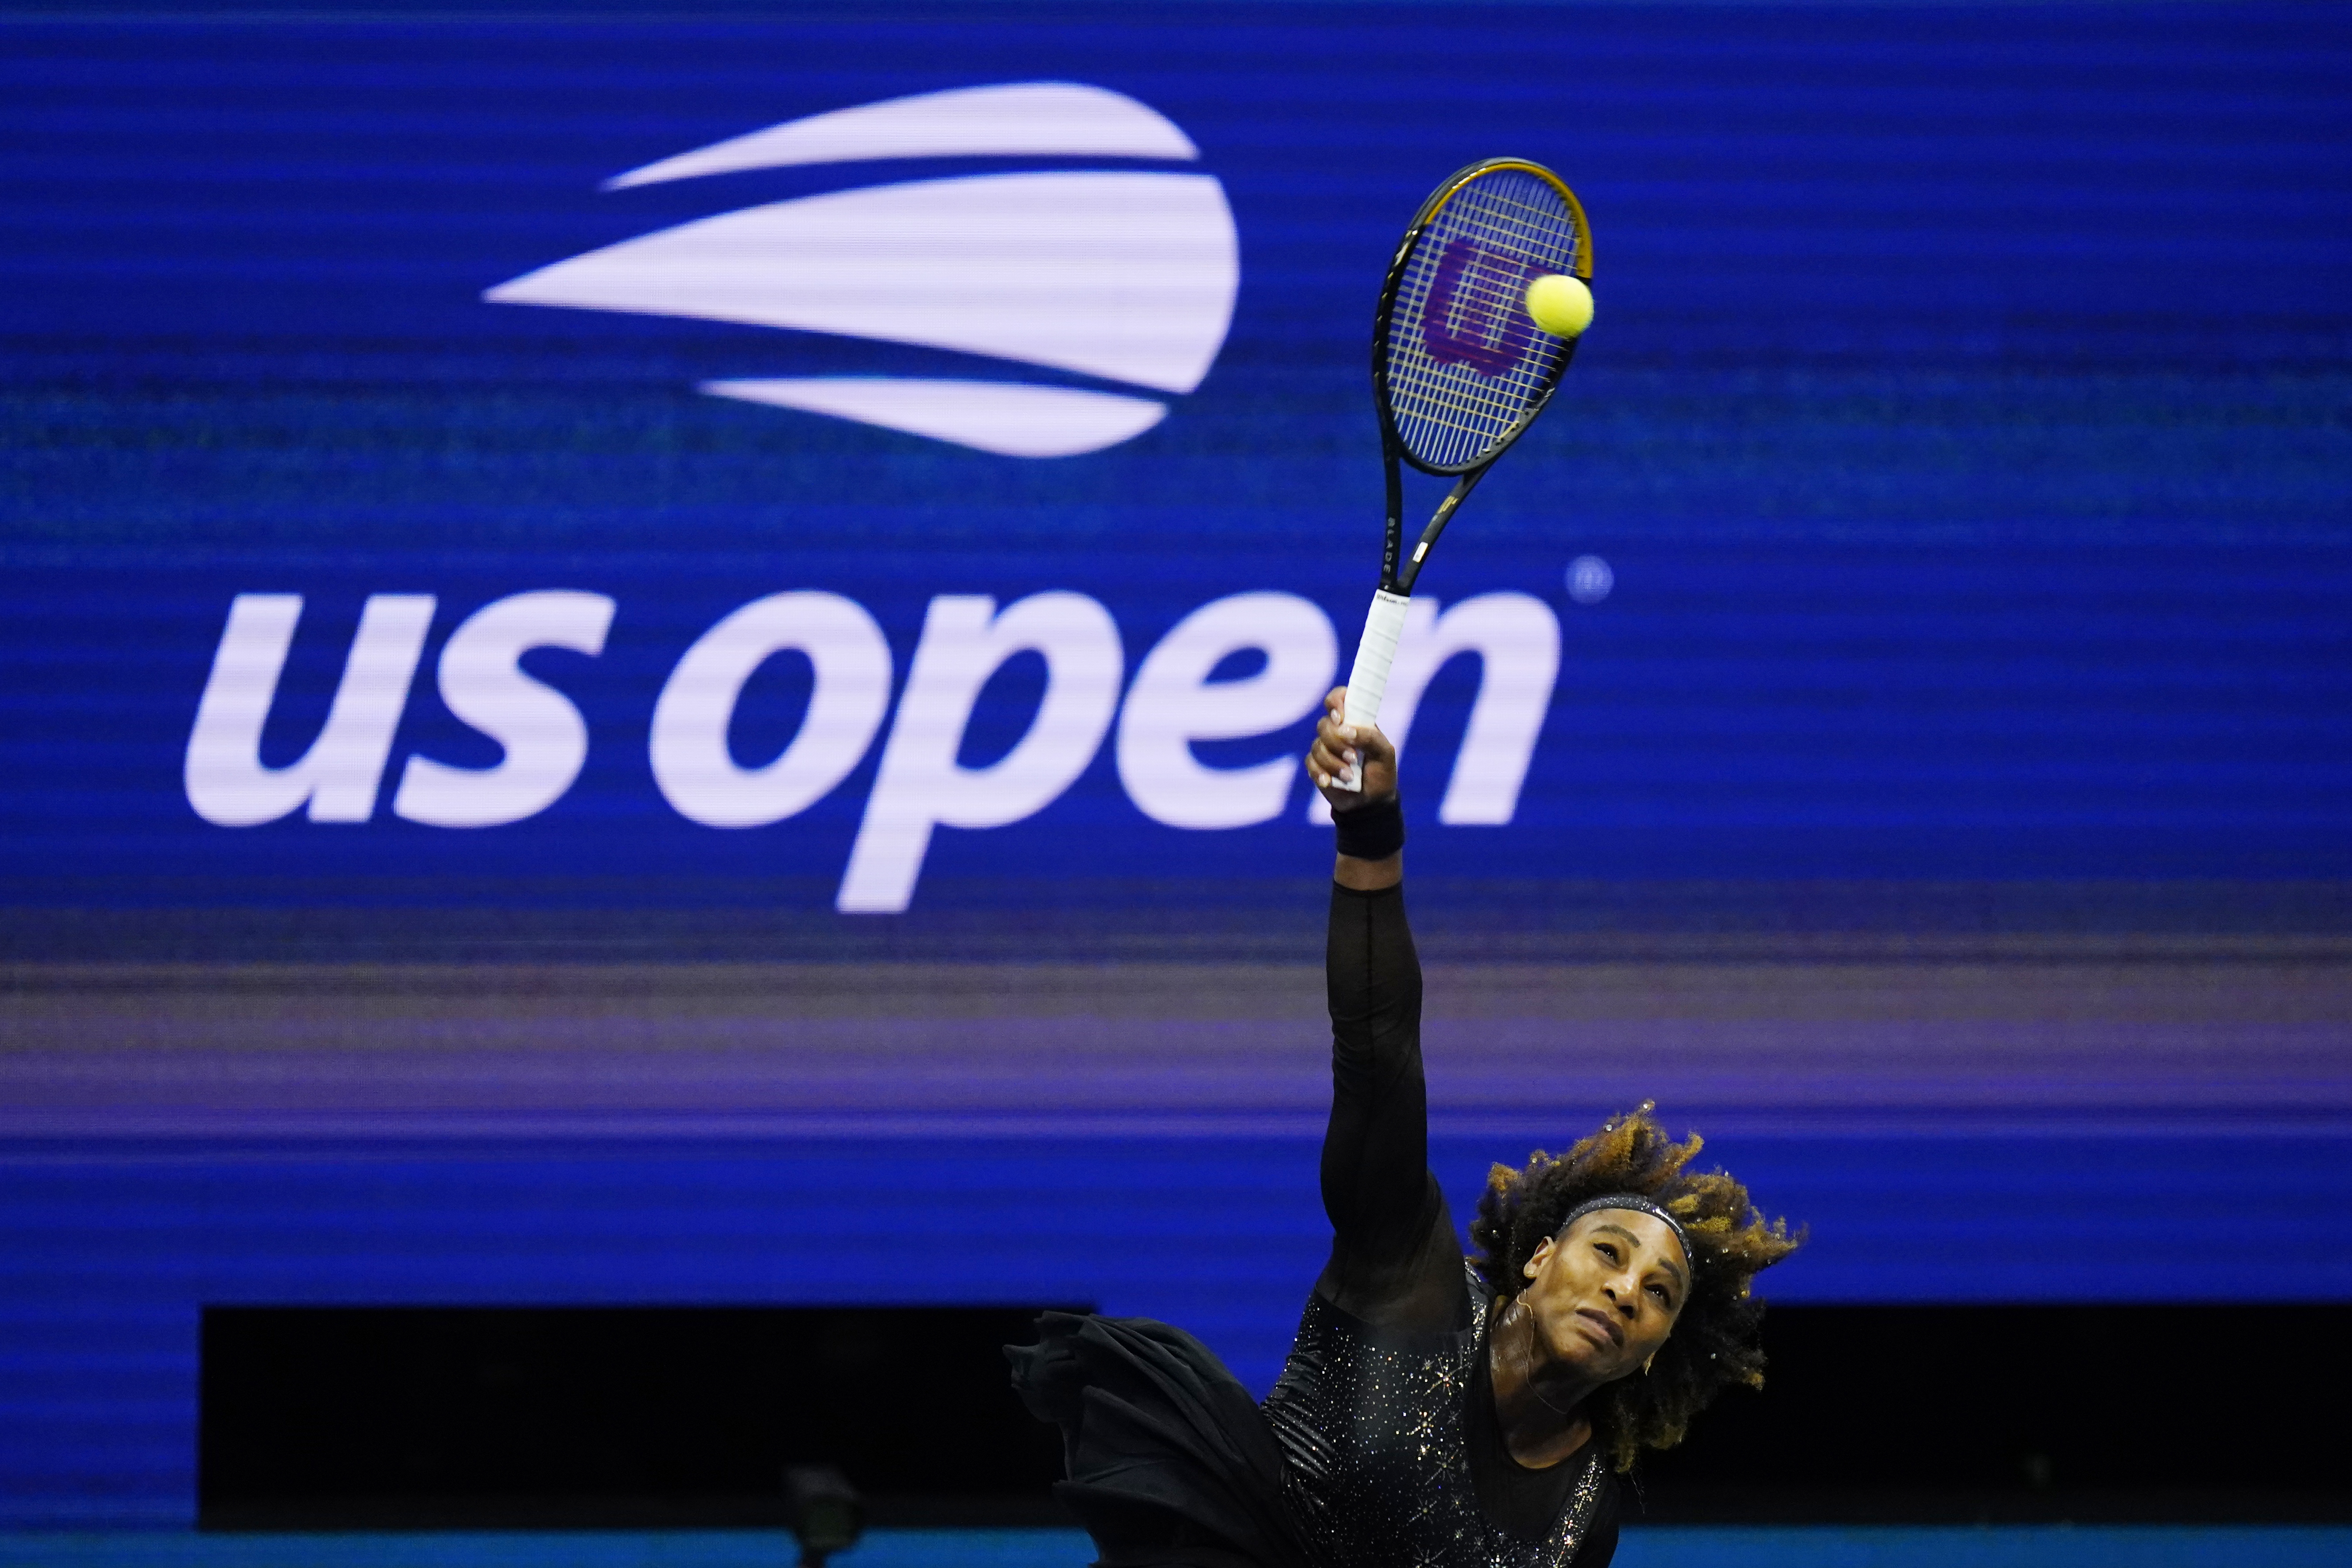 Serena and Venus Williams doubles match Free live stream, U.S